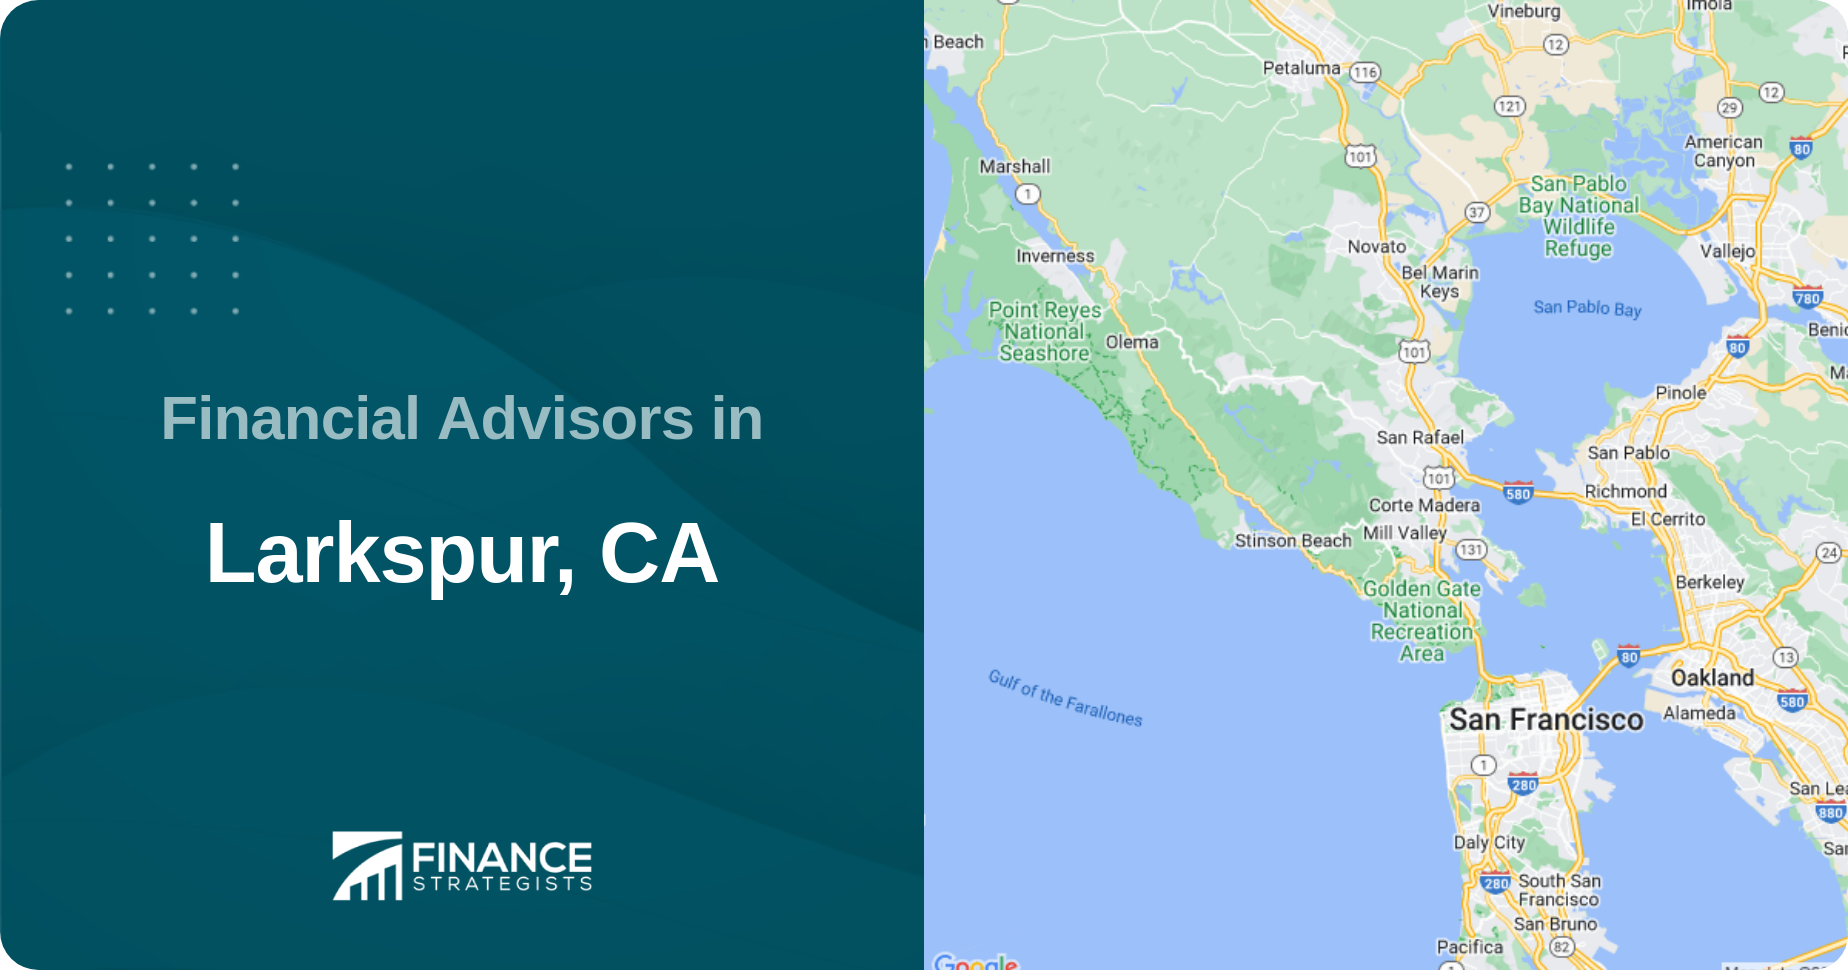 Financial Advisors in Larkspur, CA